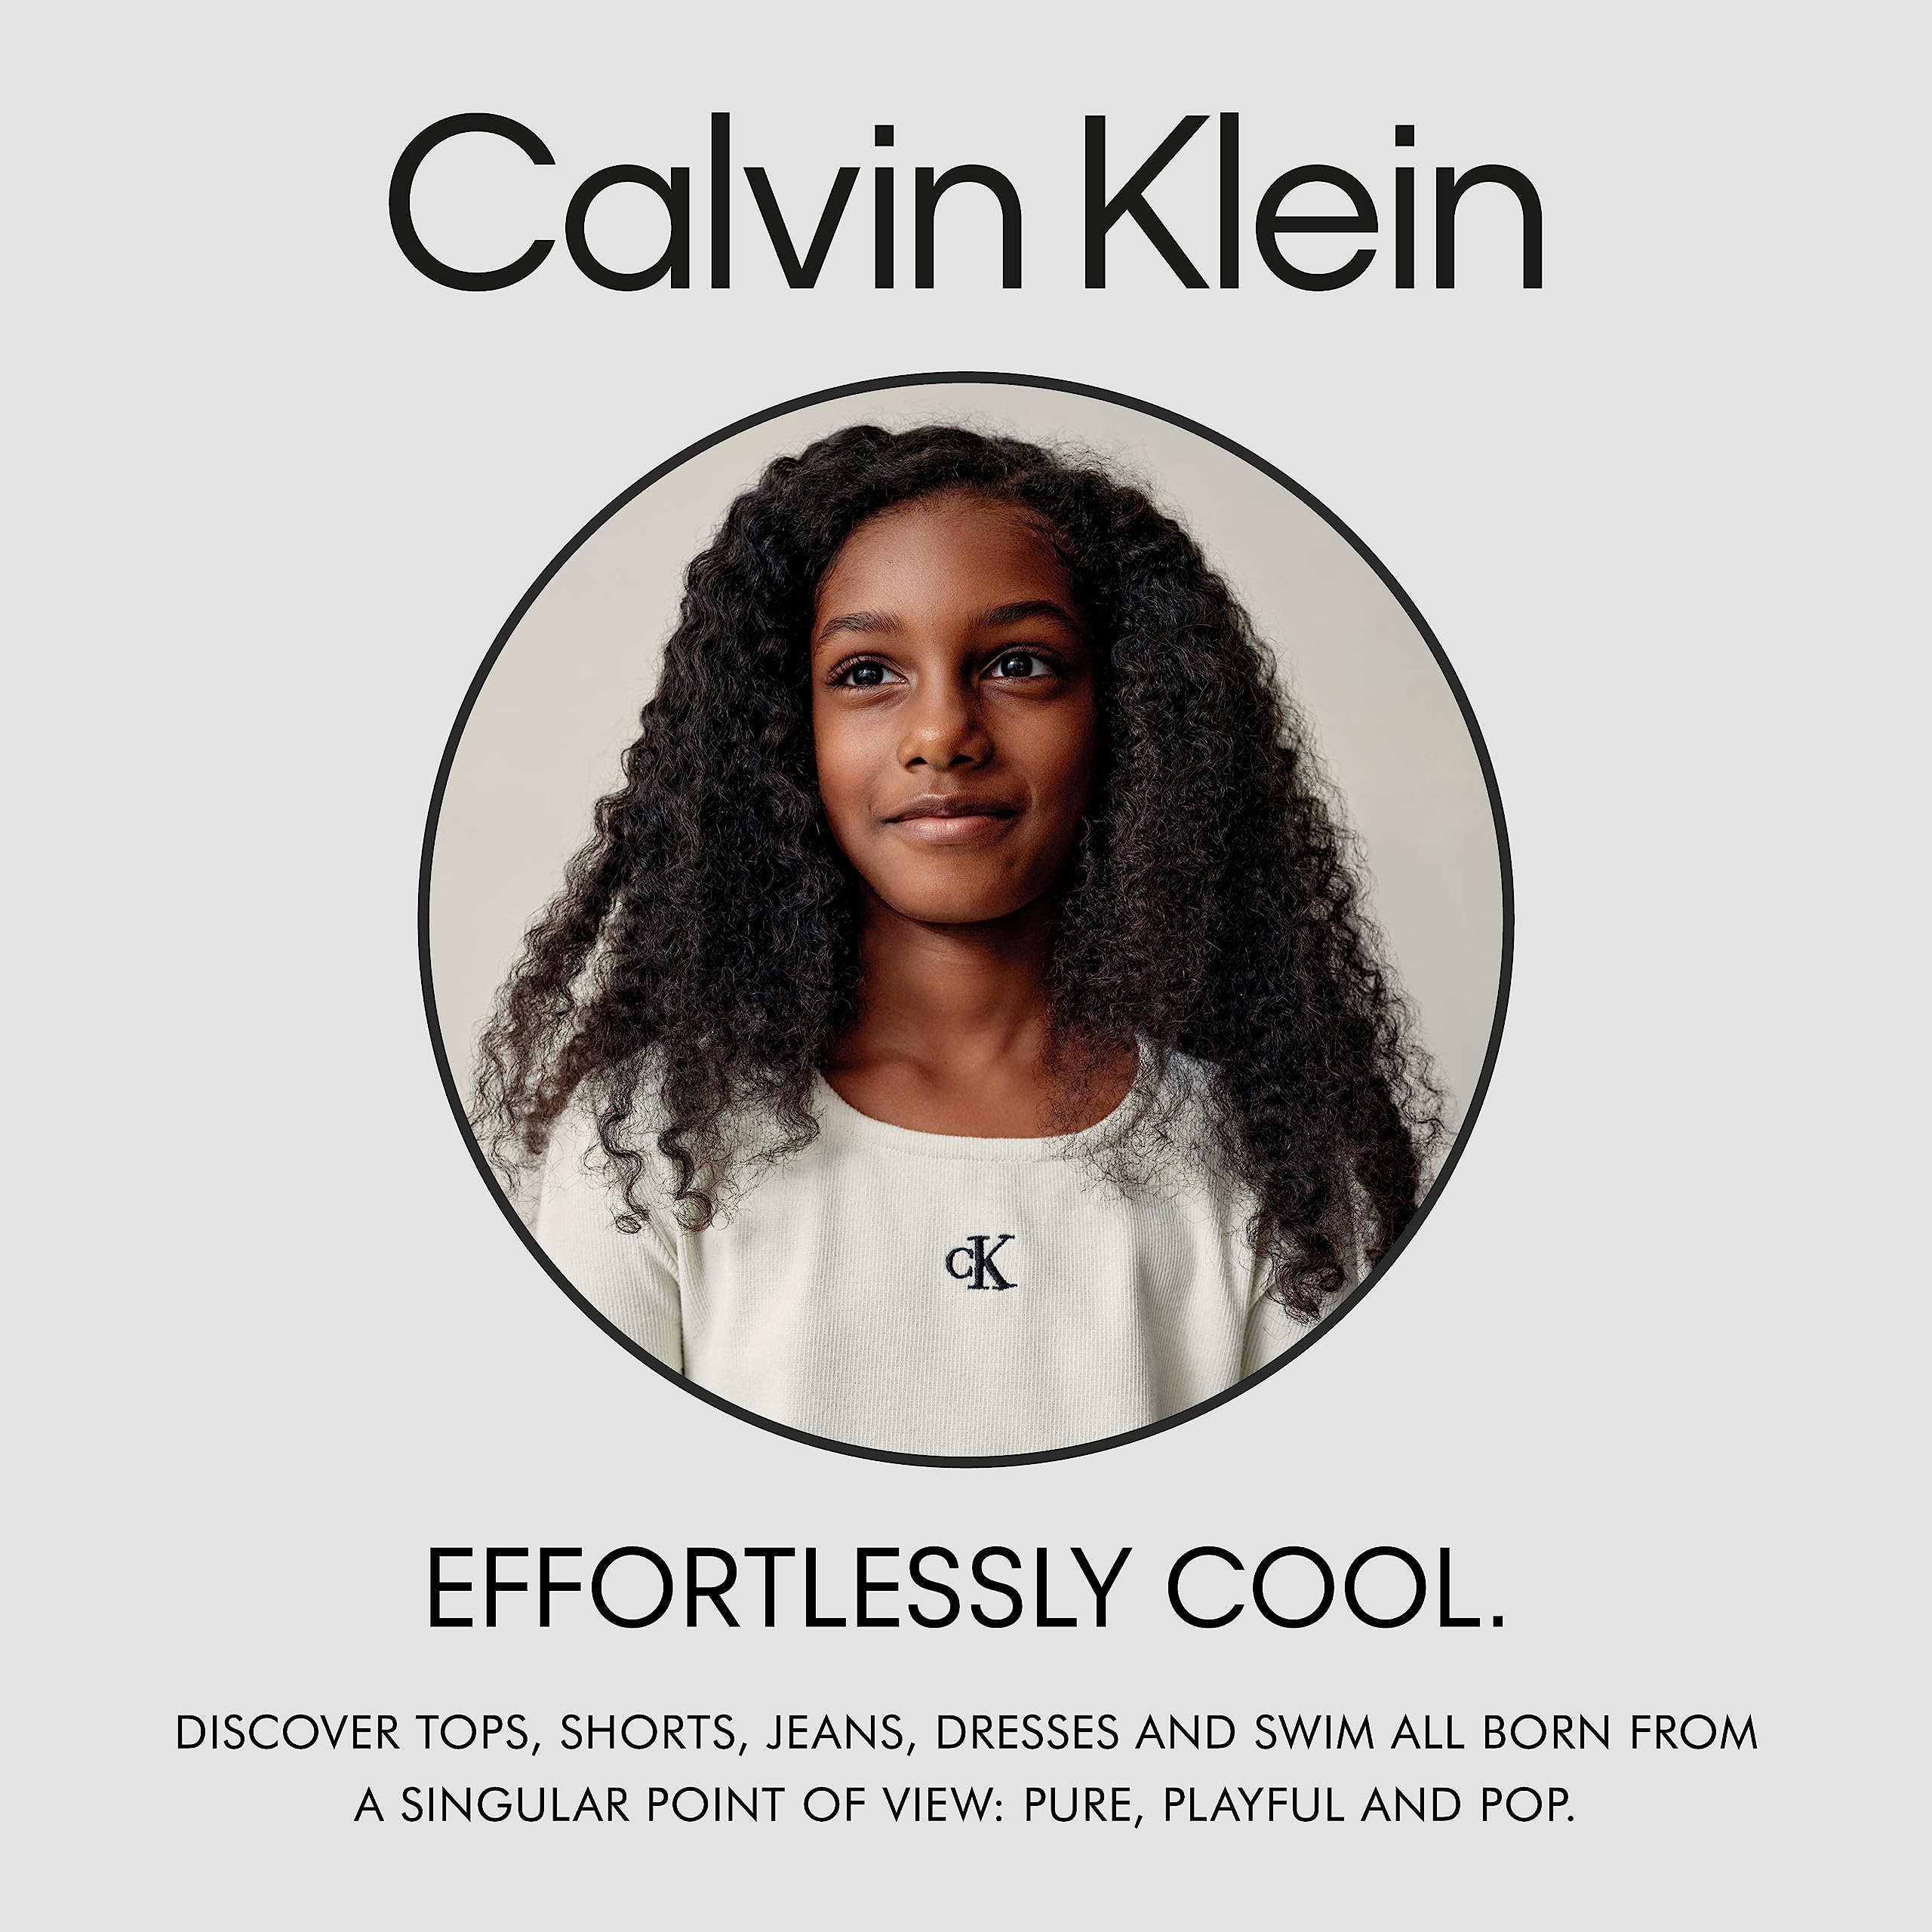 Calvin Klein Girls' Two-Piece Rashguard Swimsuit Set with UPF 50+ Sun Protection